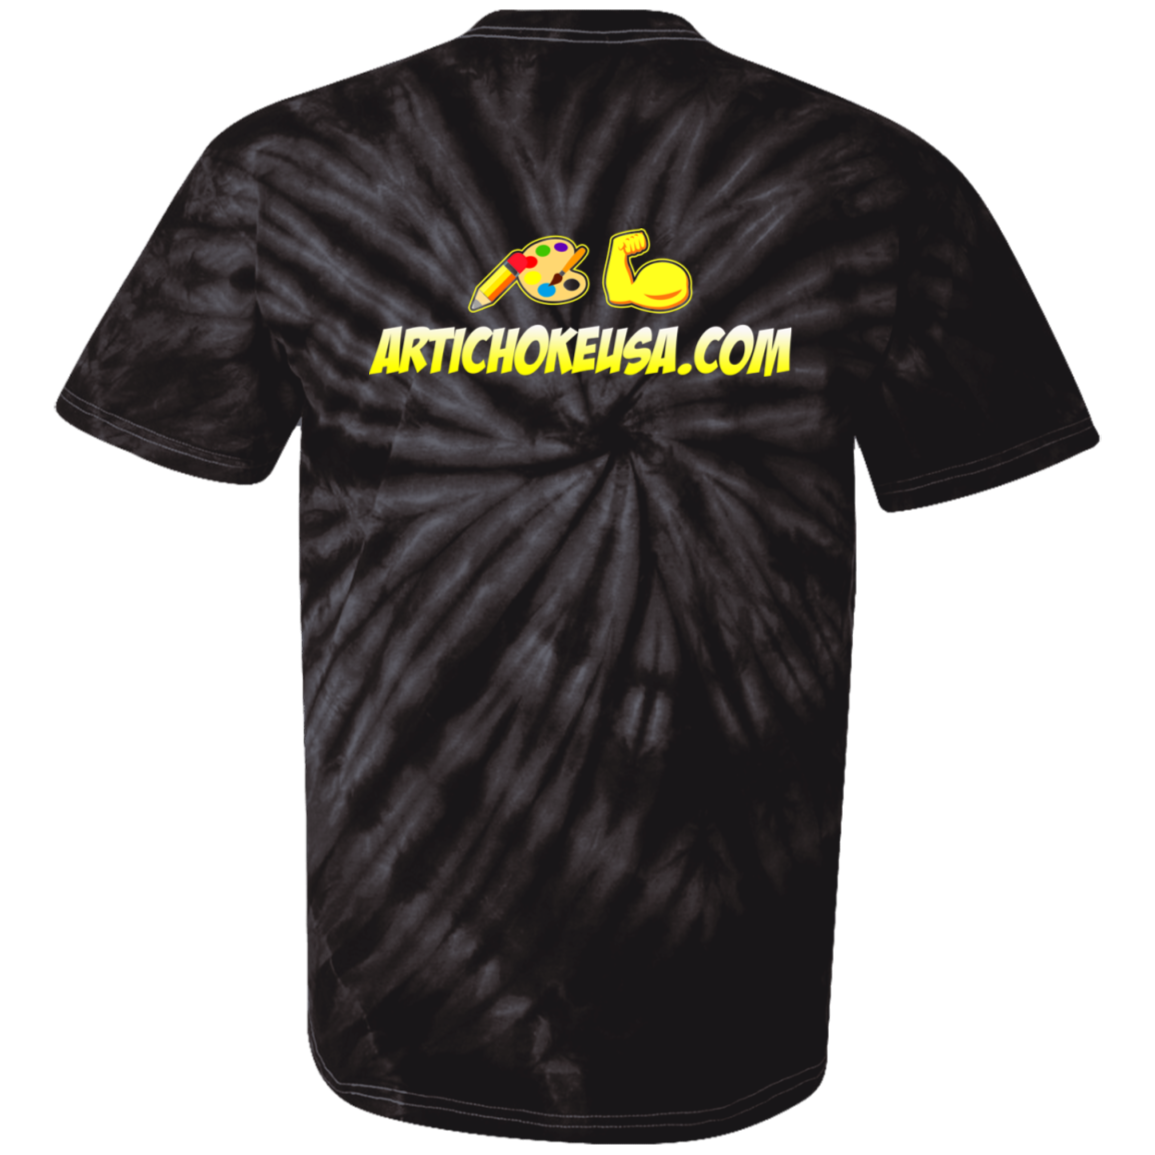 ArtichokeUSA Custom Design. Art Strong. 100% Cotton Tie Dye T-Shirt